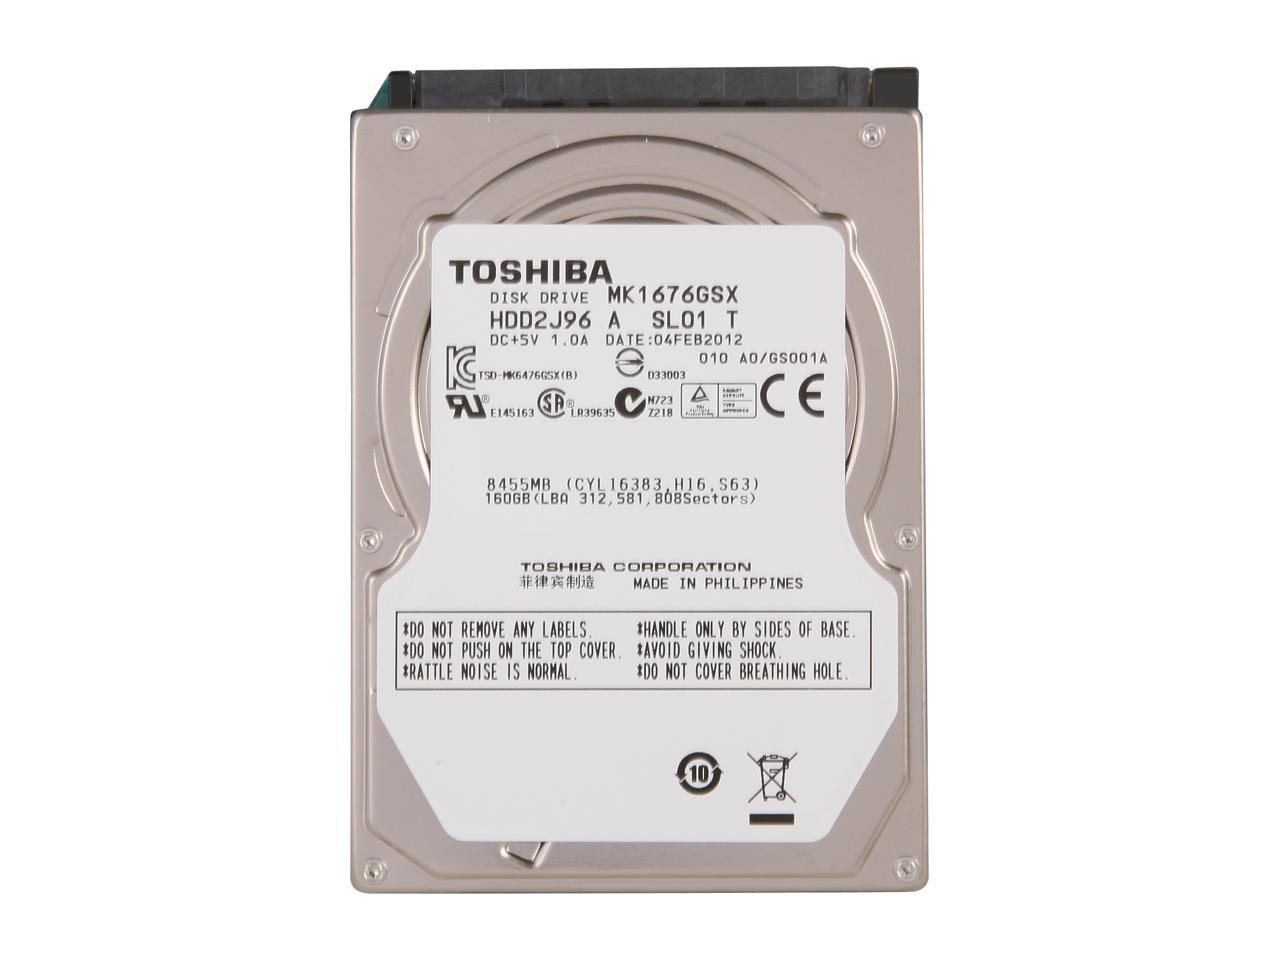 TOSHIBA MK1676GSX (HDD2J96) 160GB 5400 RPM SATA 2.5